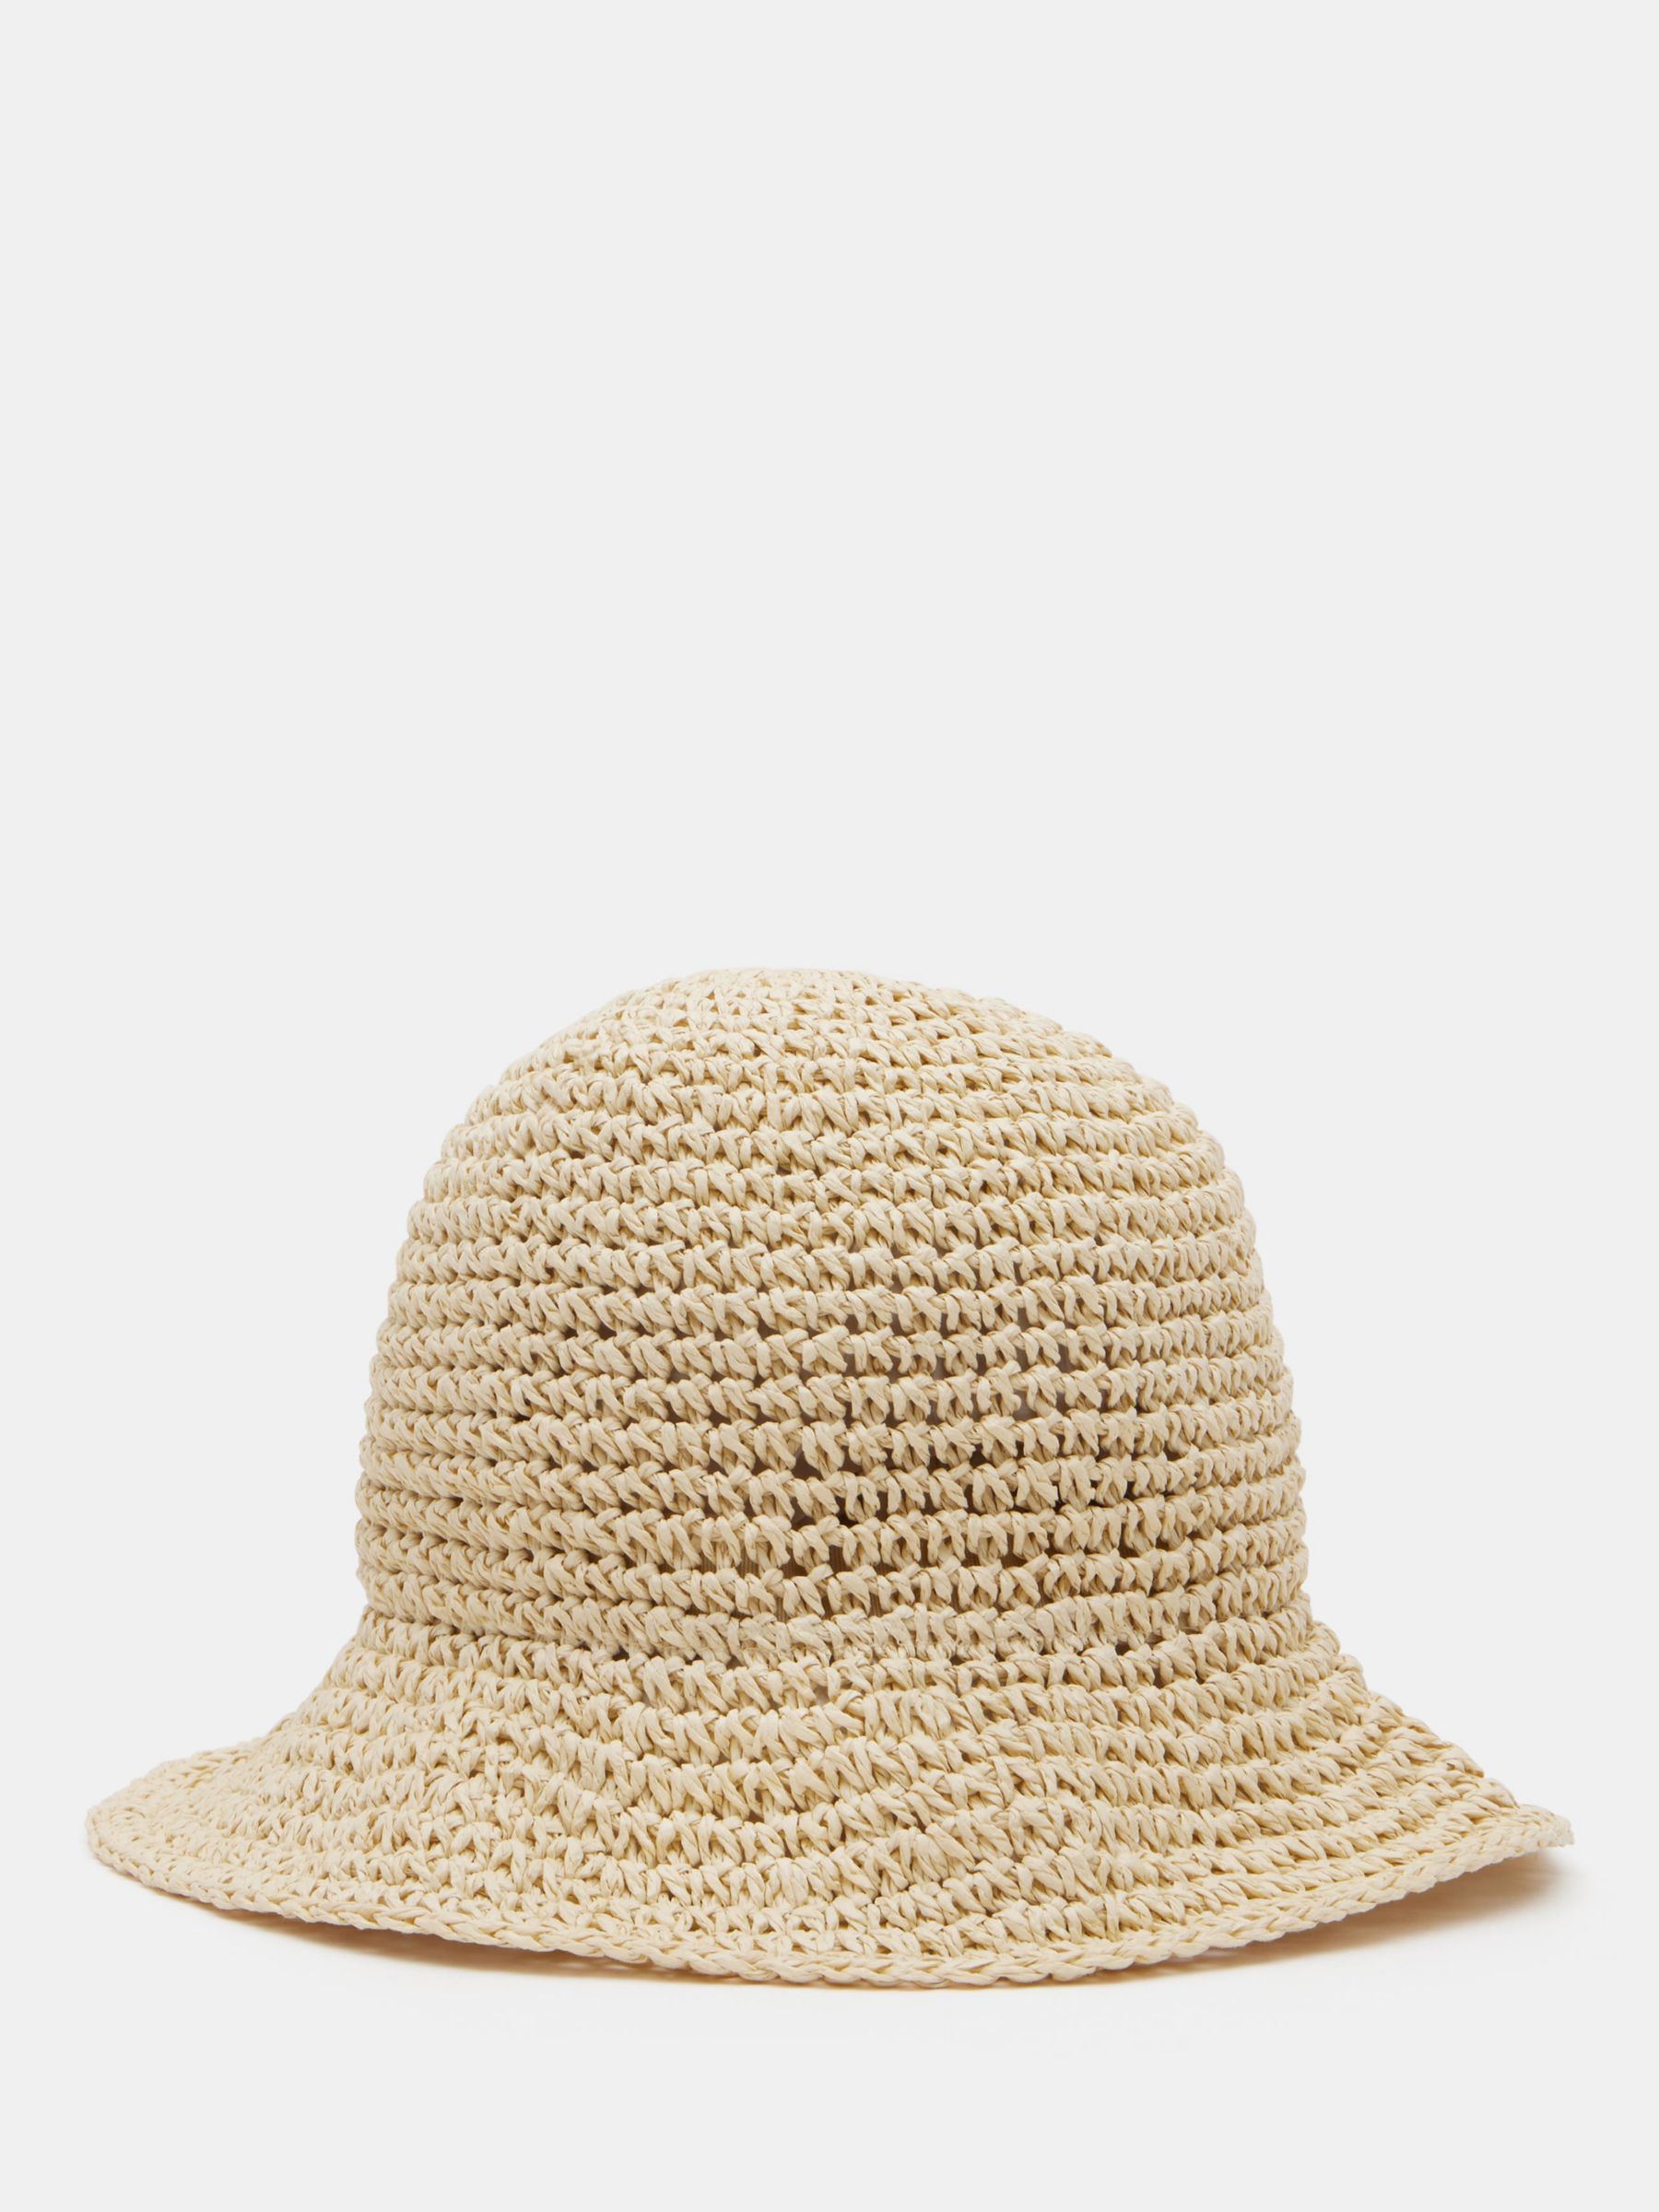 HUSH Remy Raffia Bucket Hat, Natural, One Size